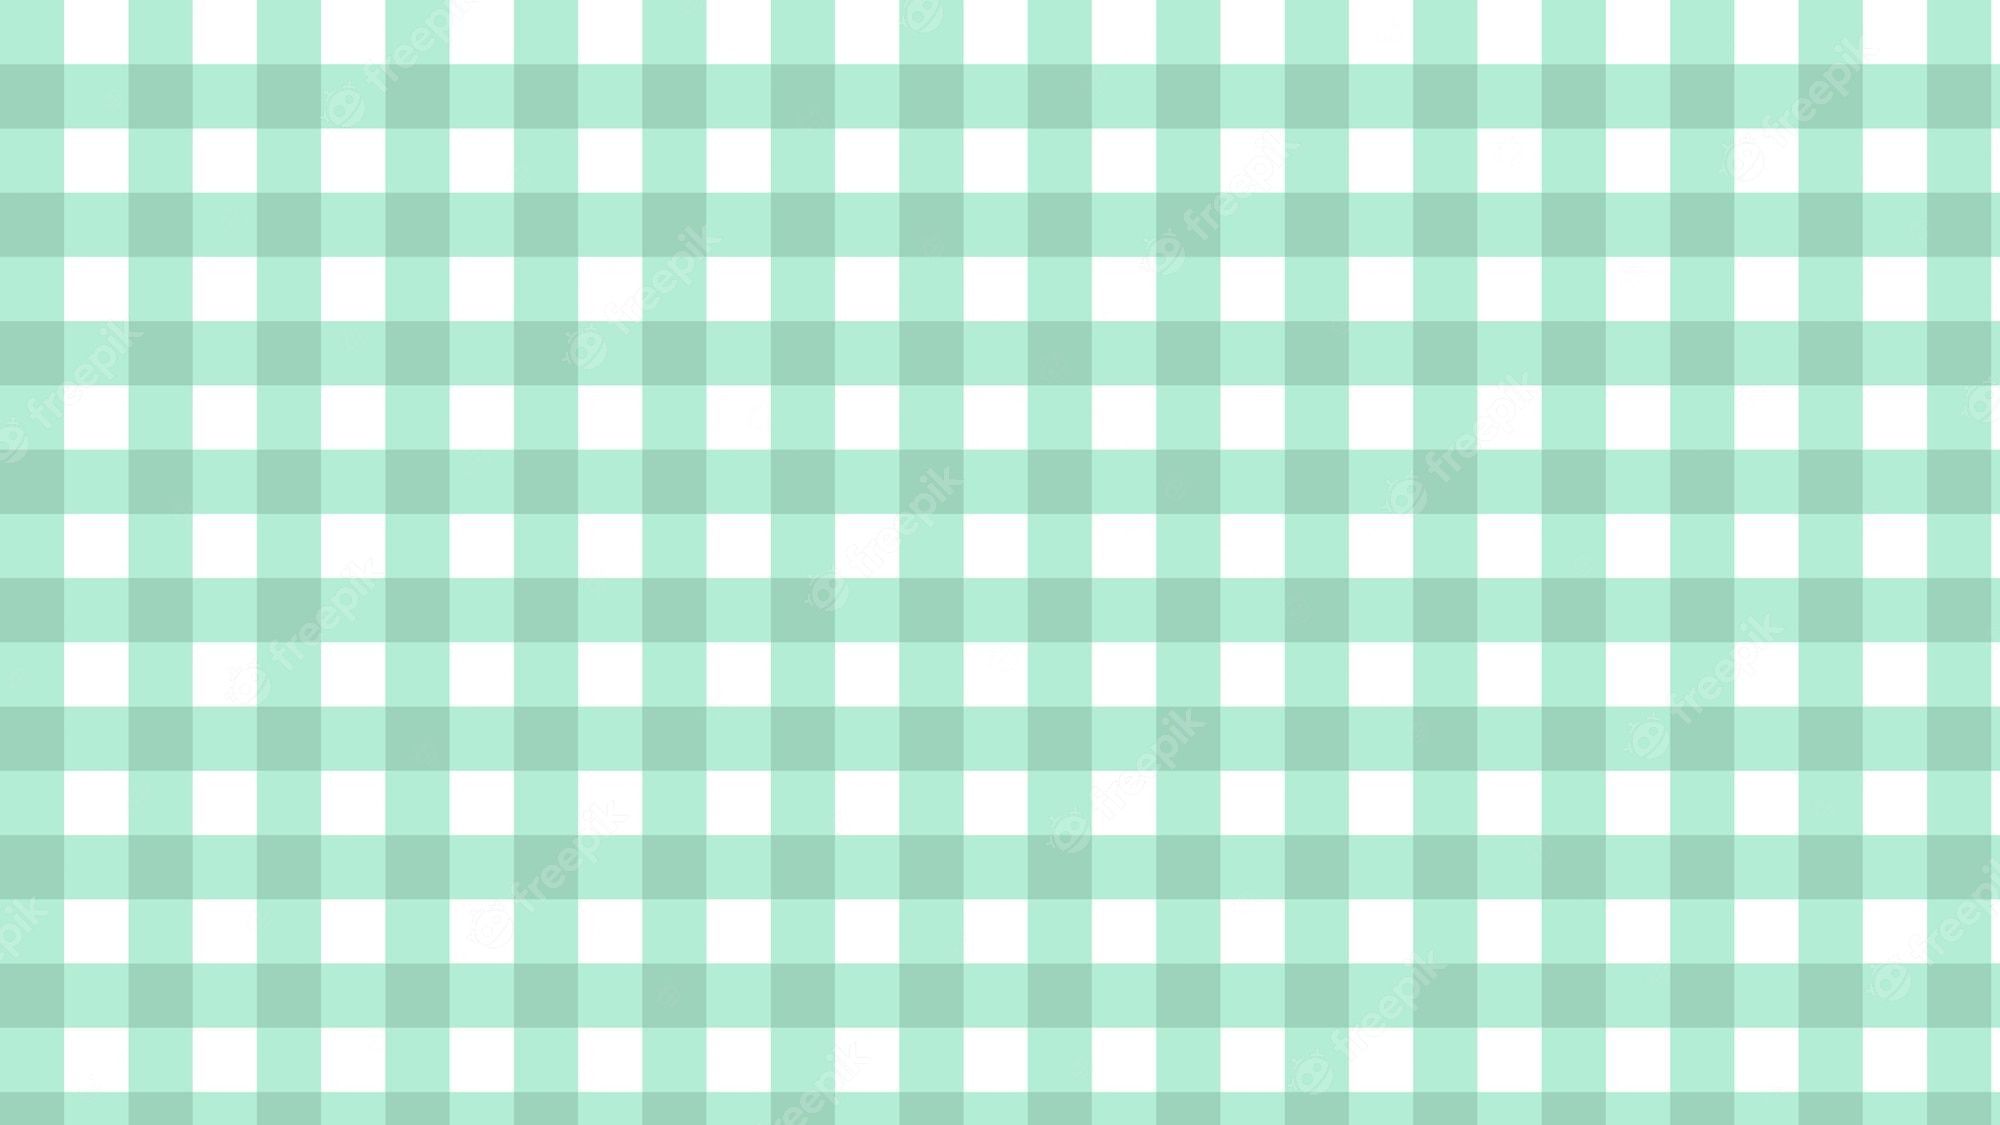 Premium Vector. Aesthetic cute pastel green gingham checkerboard plaid tartan pattern background wallpaper